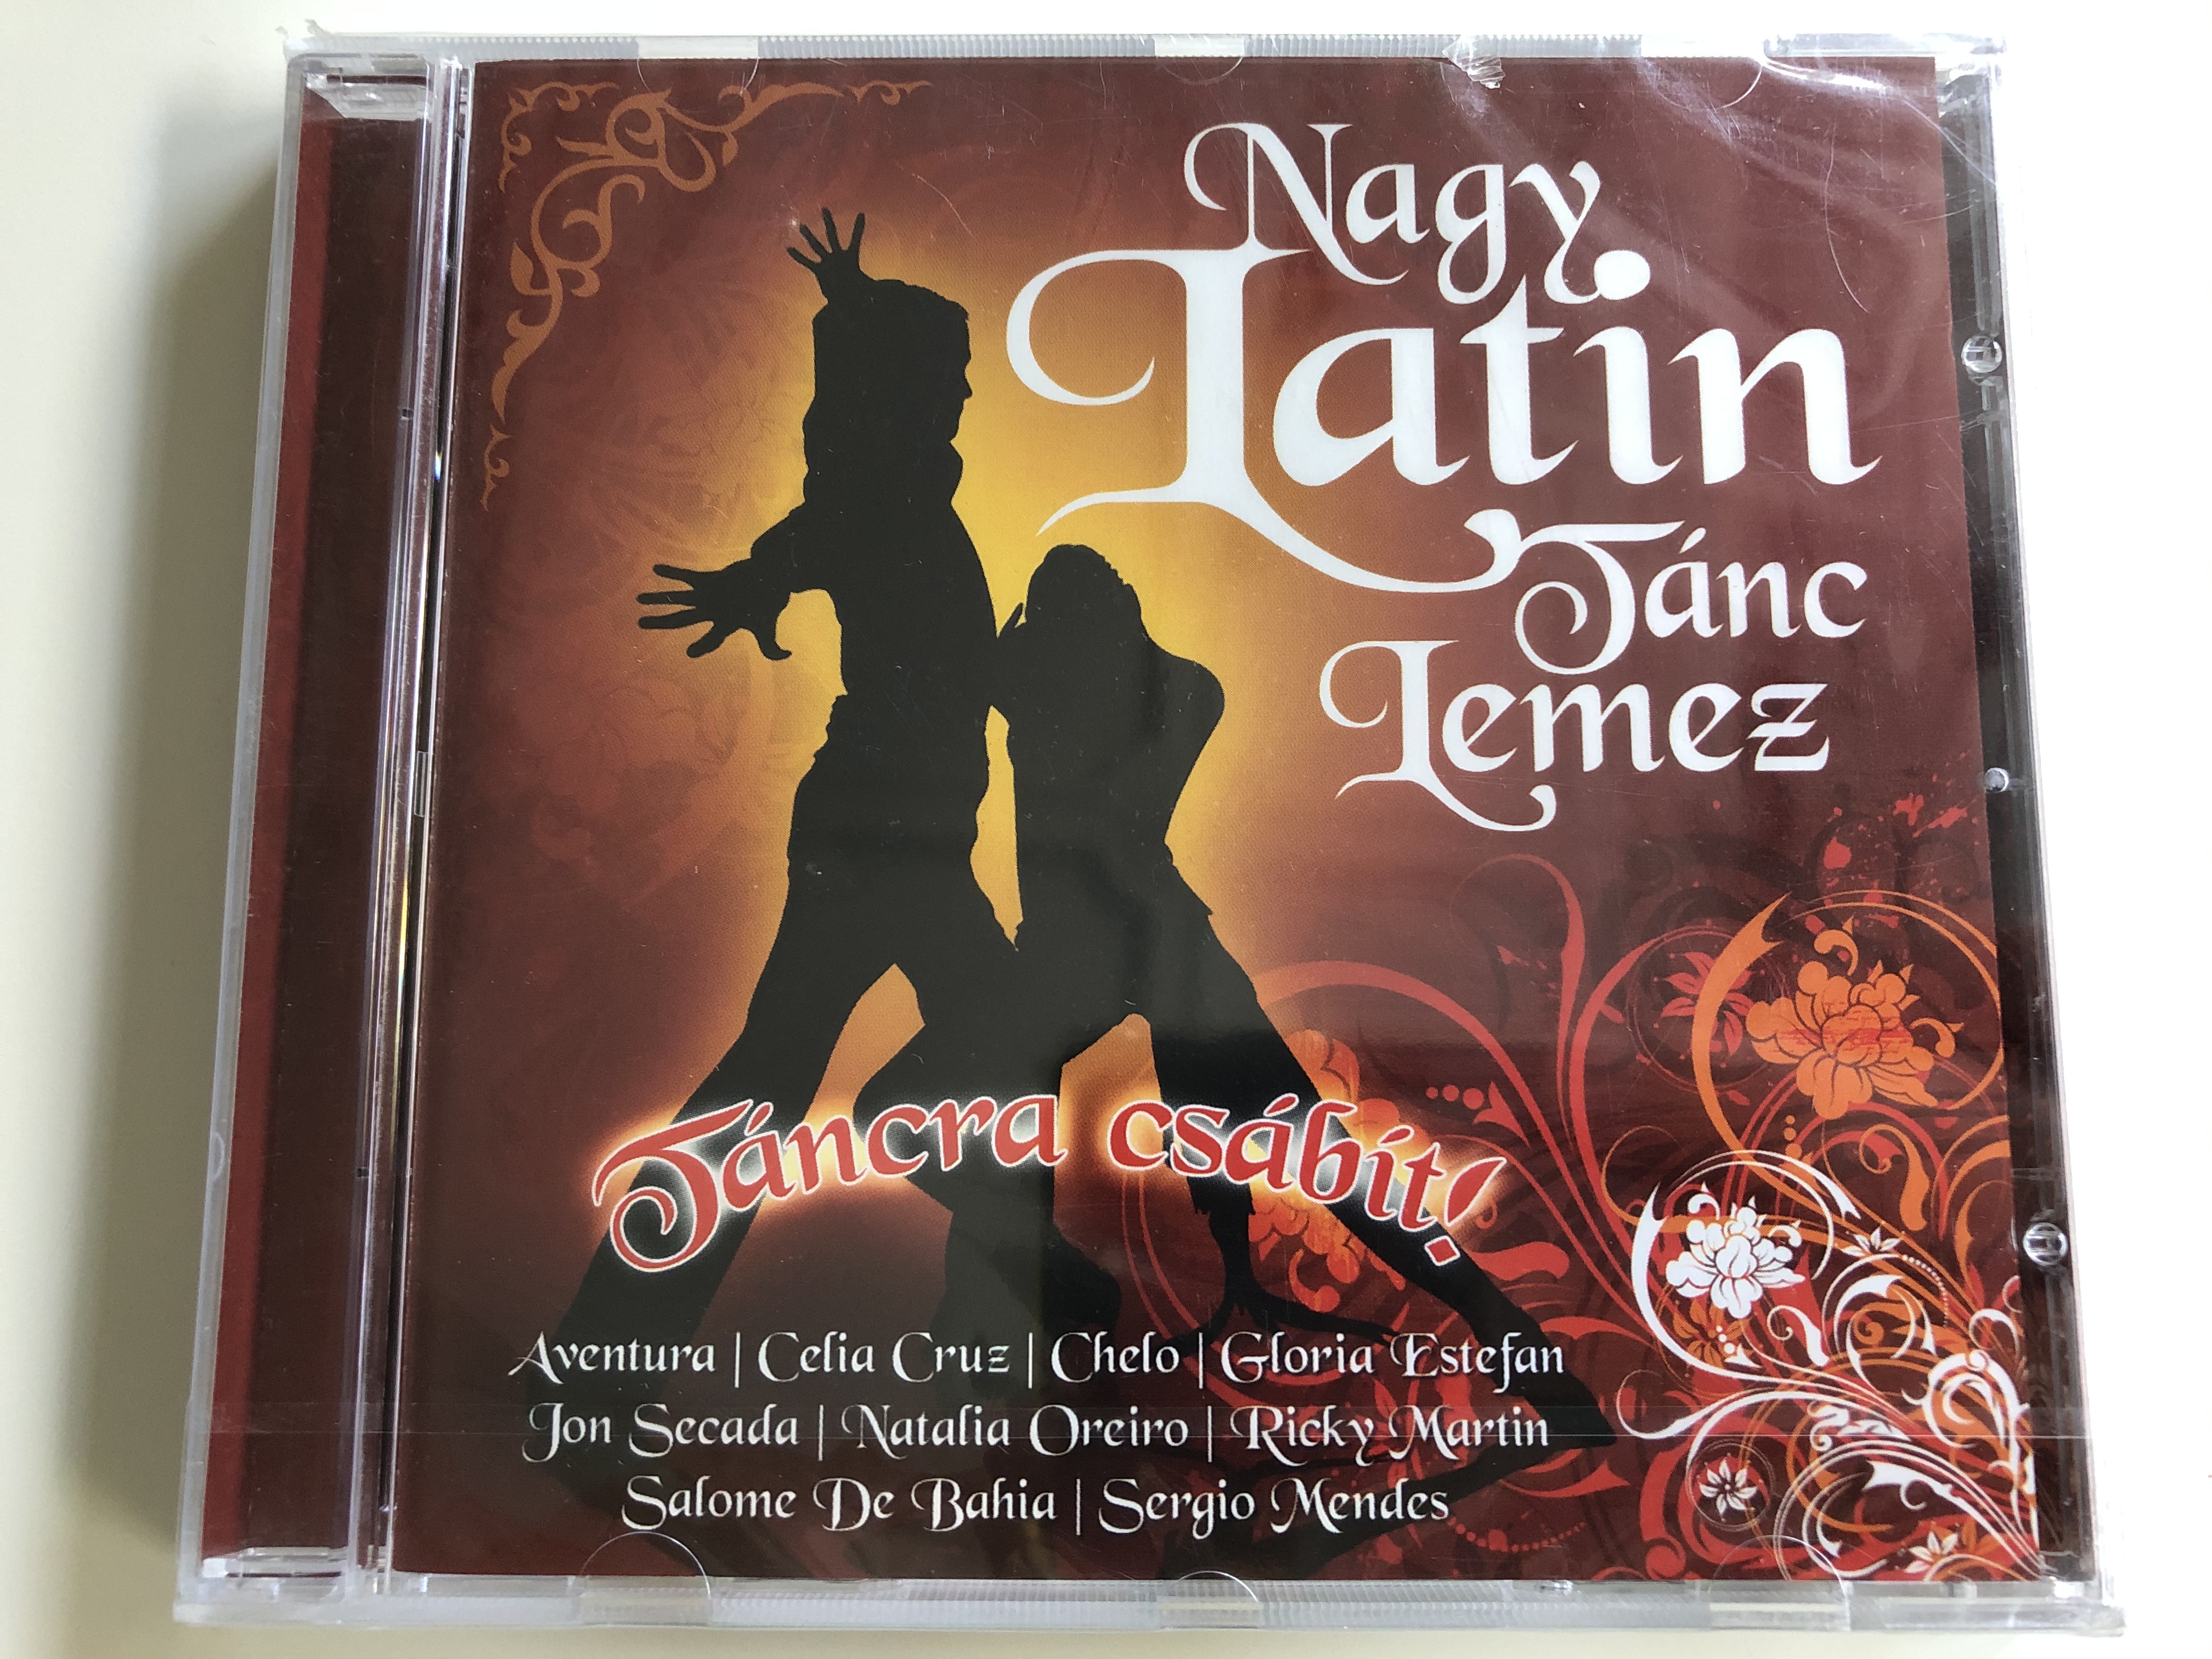 nagy-latin-tanc-lemez-tancra-csabit-aventura-celia-cruz-chelo-gloria-estefan-jon-secada-natalia-oreiro-ricky-martin-salome-de-bahia-sergio-mendes-sony-bmg-music-audio-cd-2007-886971-1-.jpg